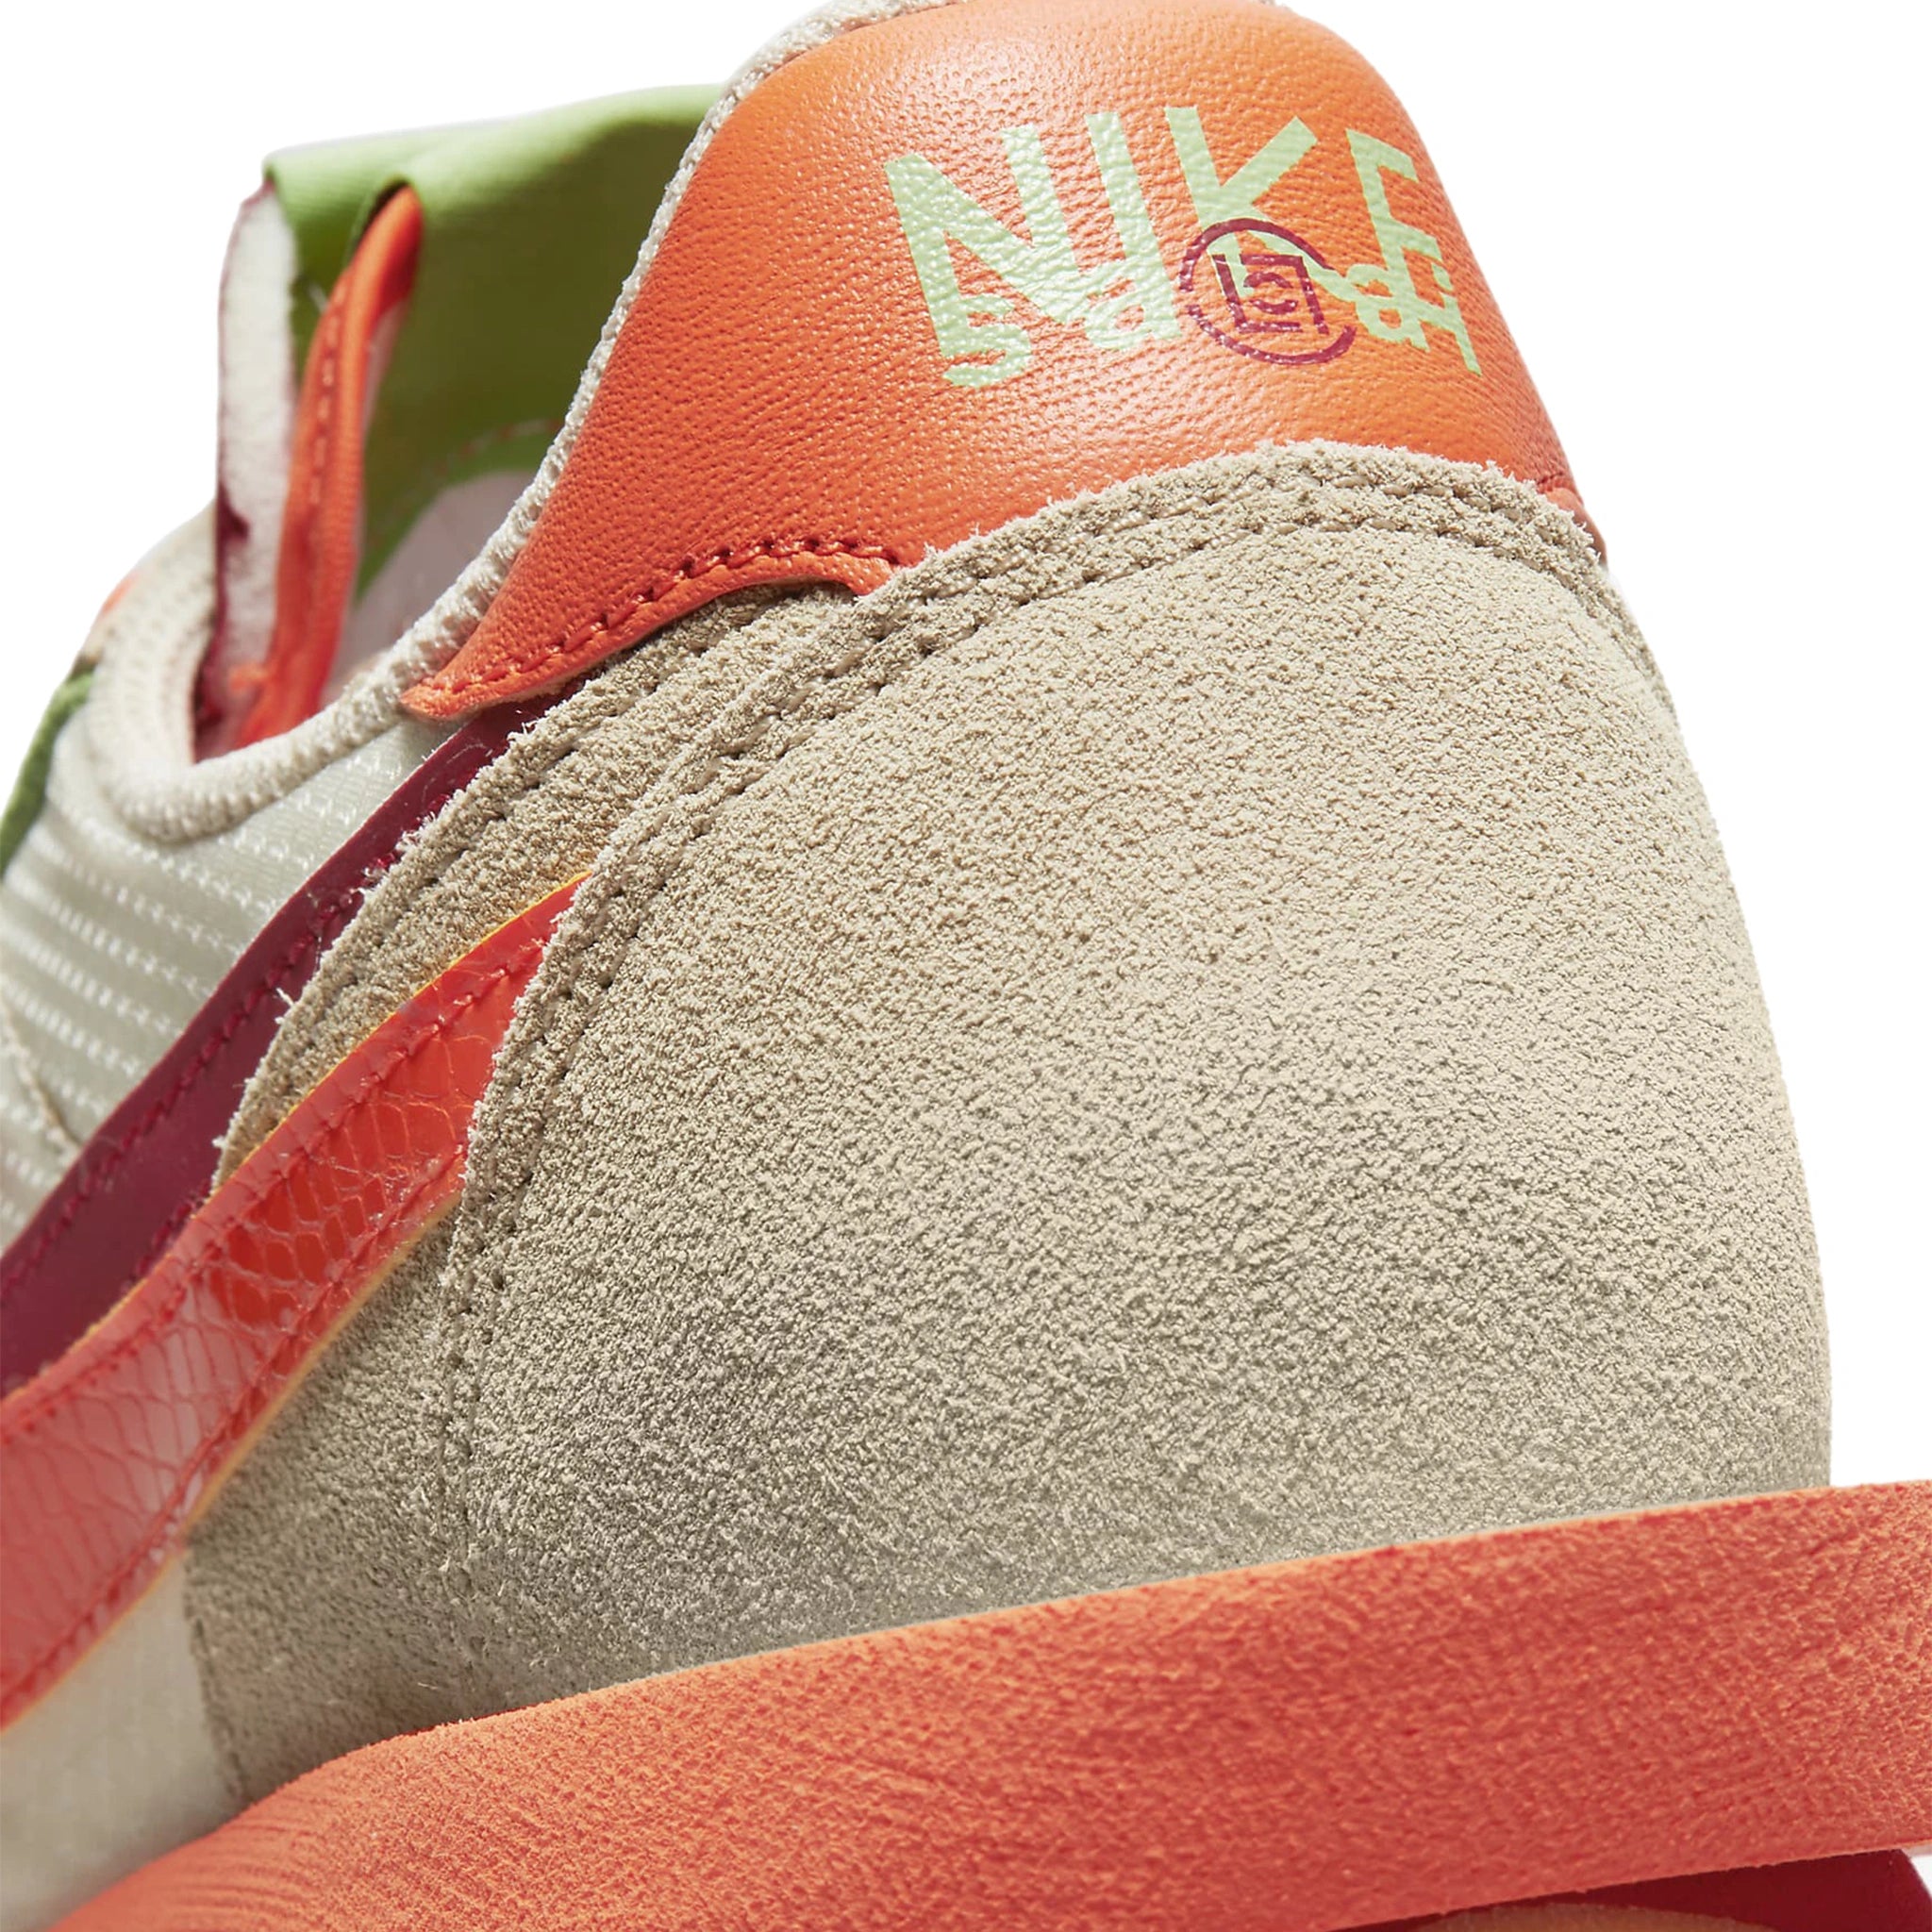 Heel view of Nike x Sacai LD Waffle CLOT Net Orange Blaze DH1347-100